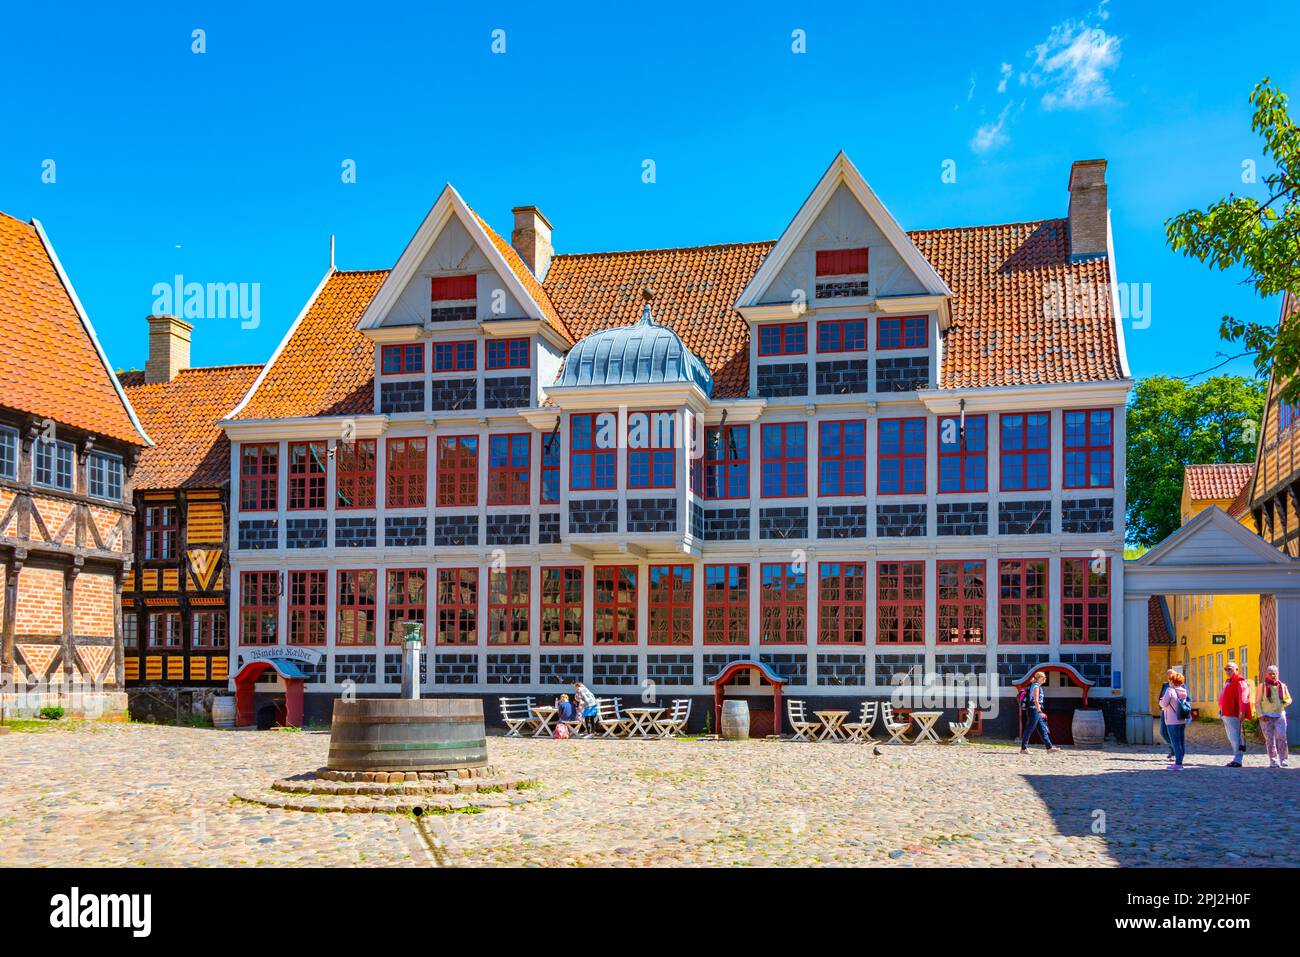 Aarhus, Denmark, June 16, 2022: Colorful houses in Den Gamle By open-air museum in Aarhus, Denmark. Stock Photo